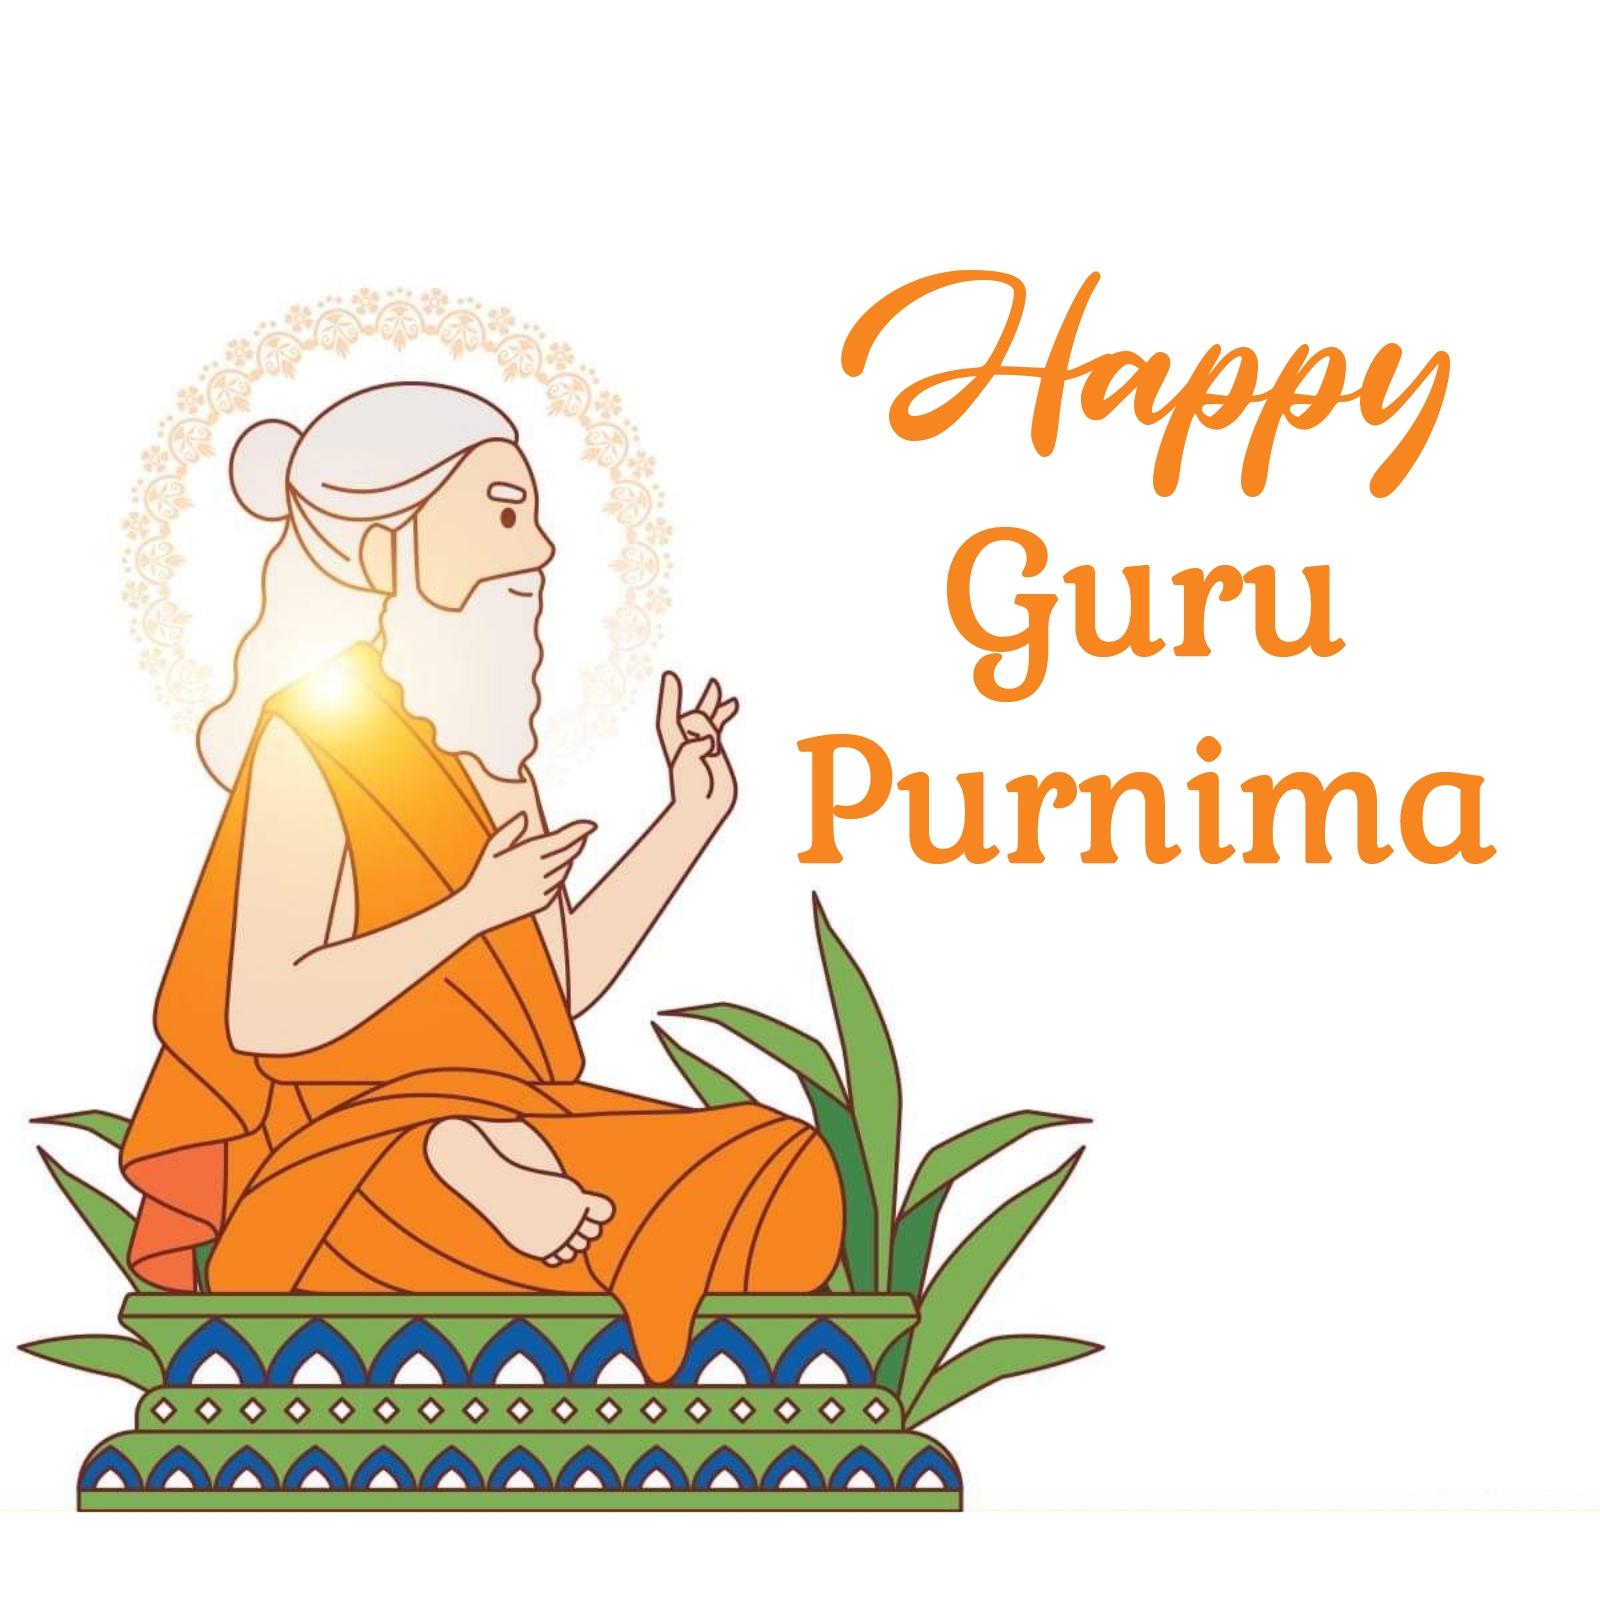 Happy Guru Purnima Whatsapp Images Download